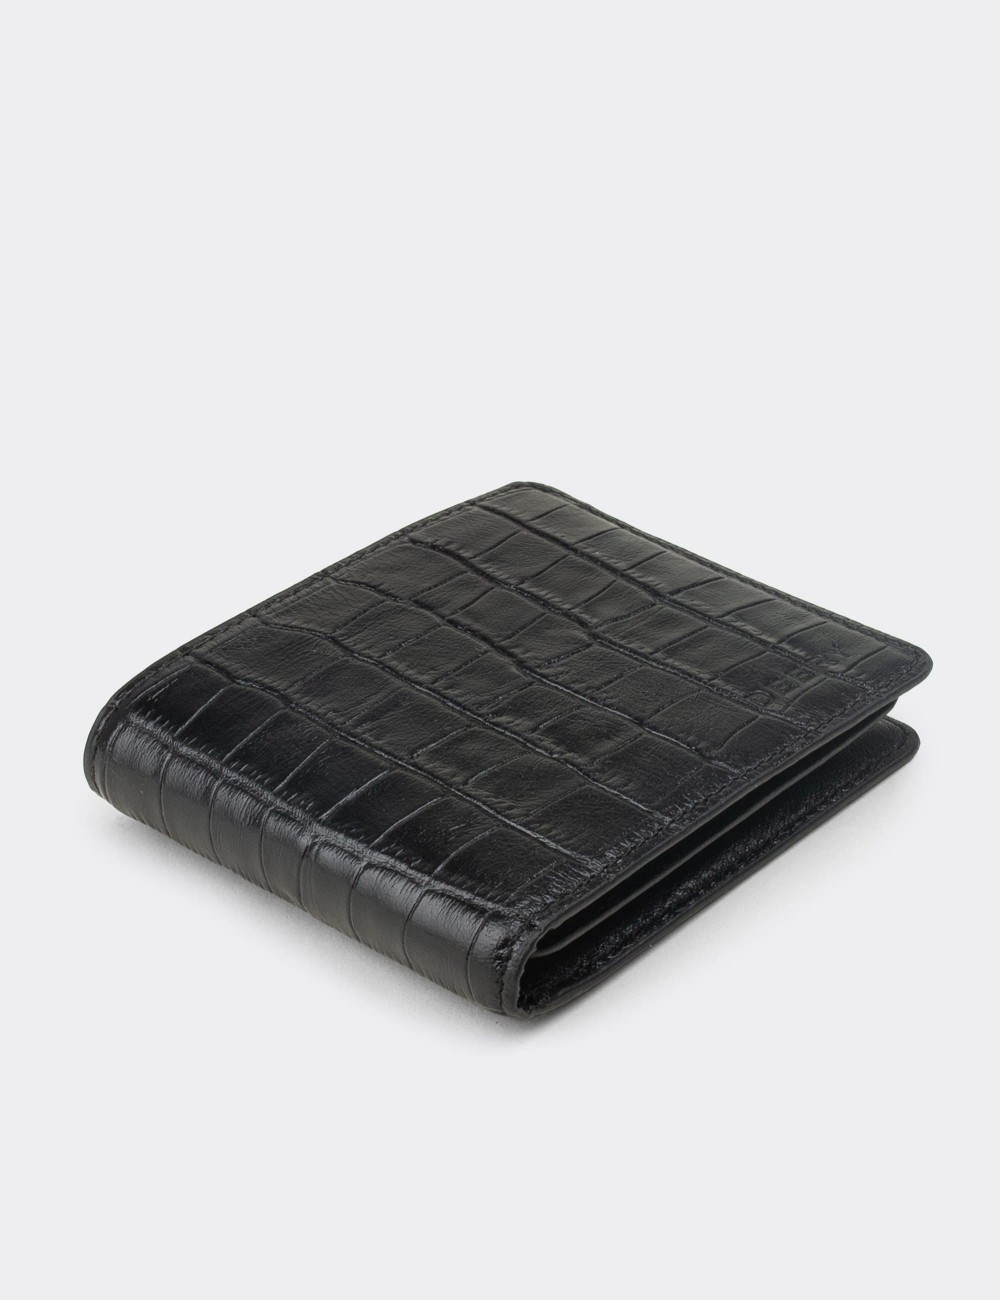  Leather Black Men's Wallet - 0390AMSYHZ02